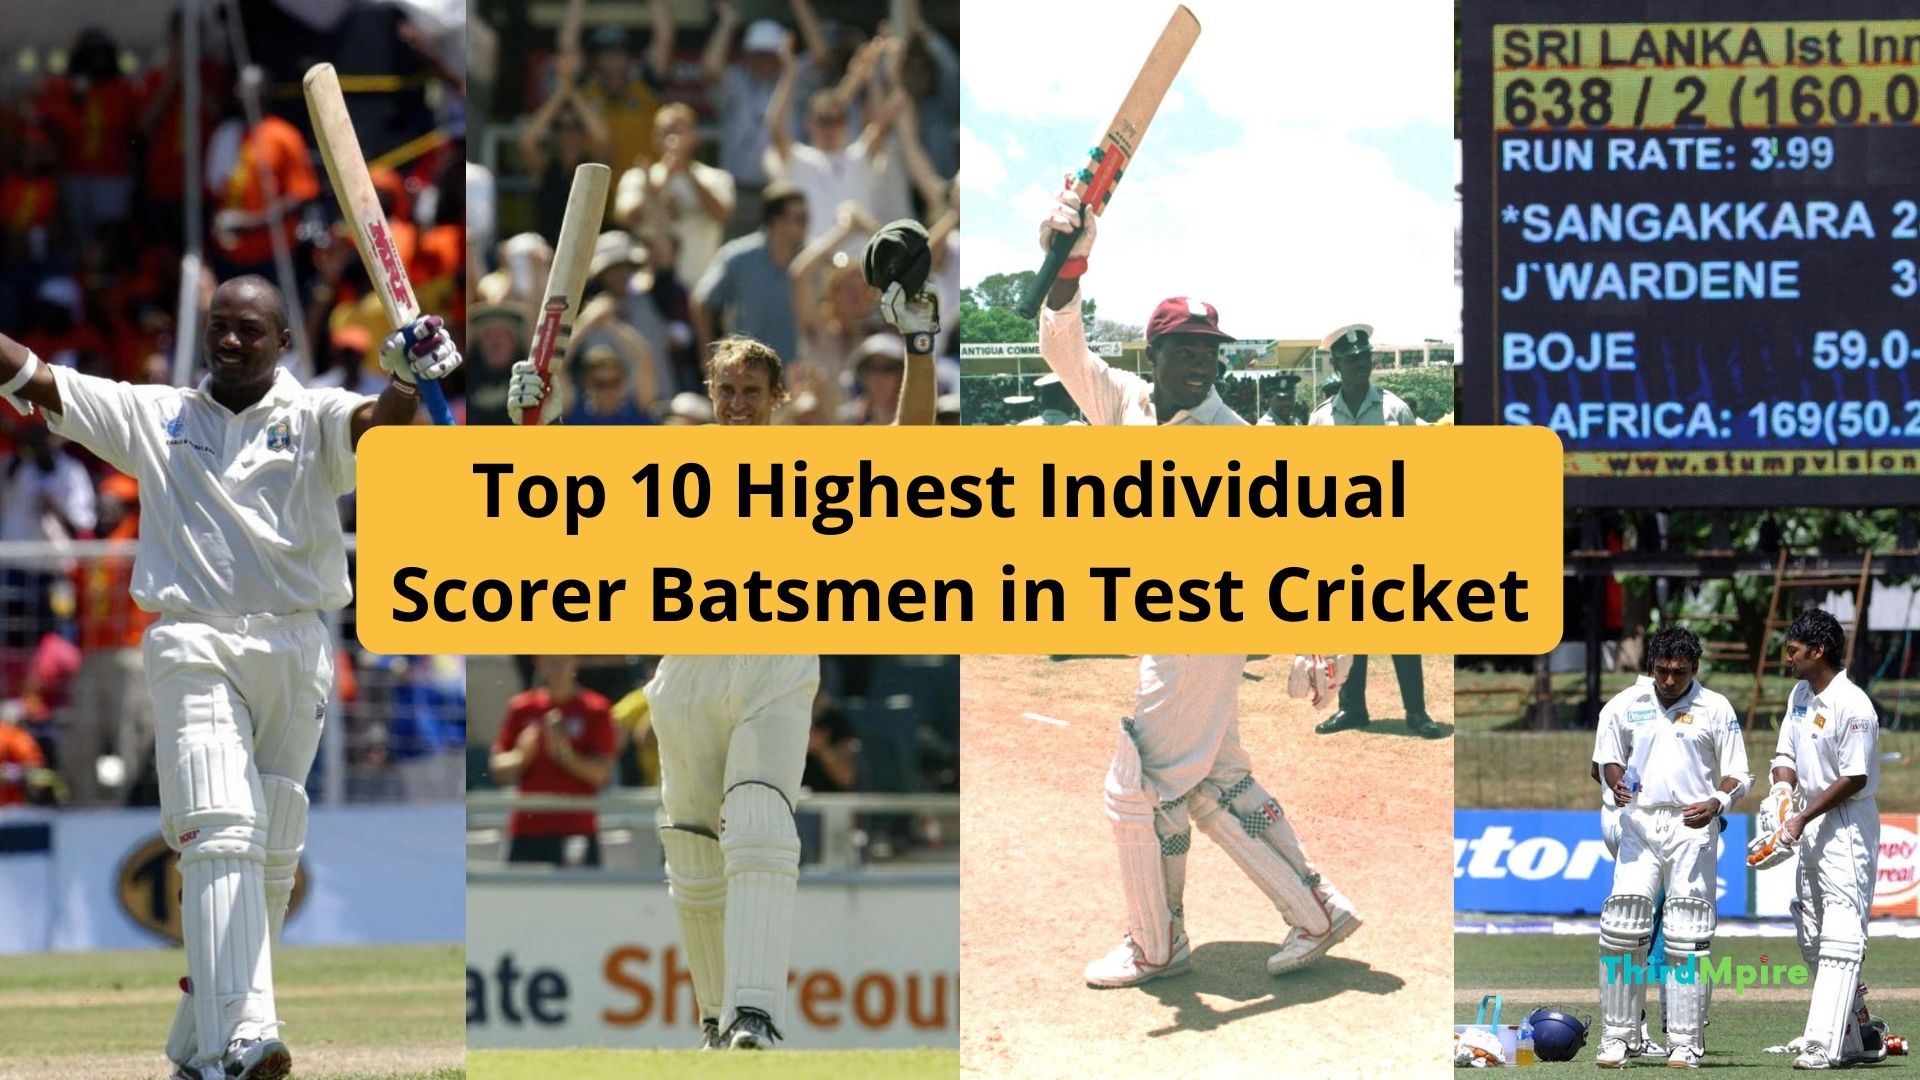 Top 10 Highest Individual Scorer Batsmen in Test Cricket